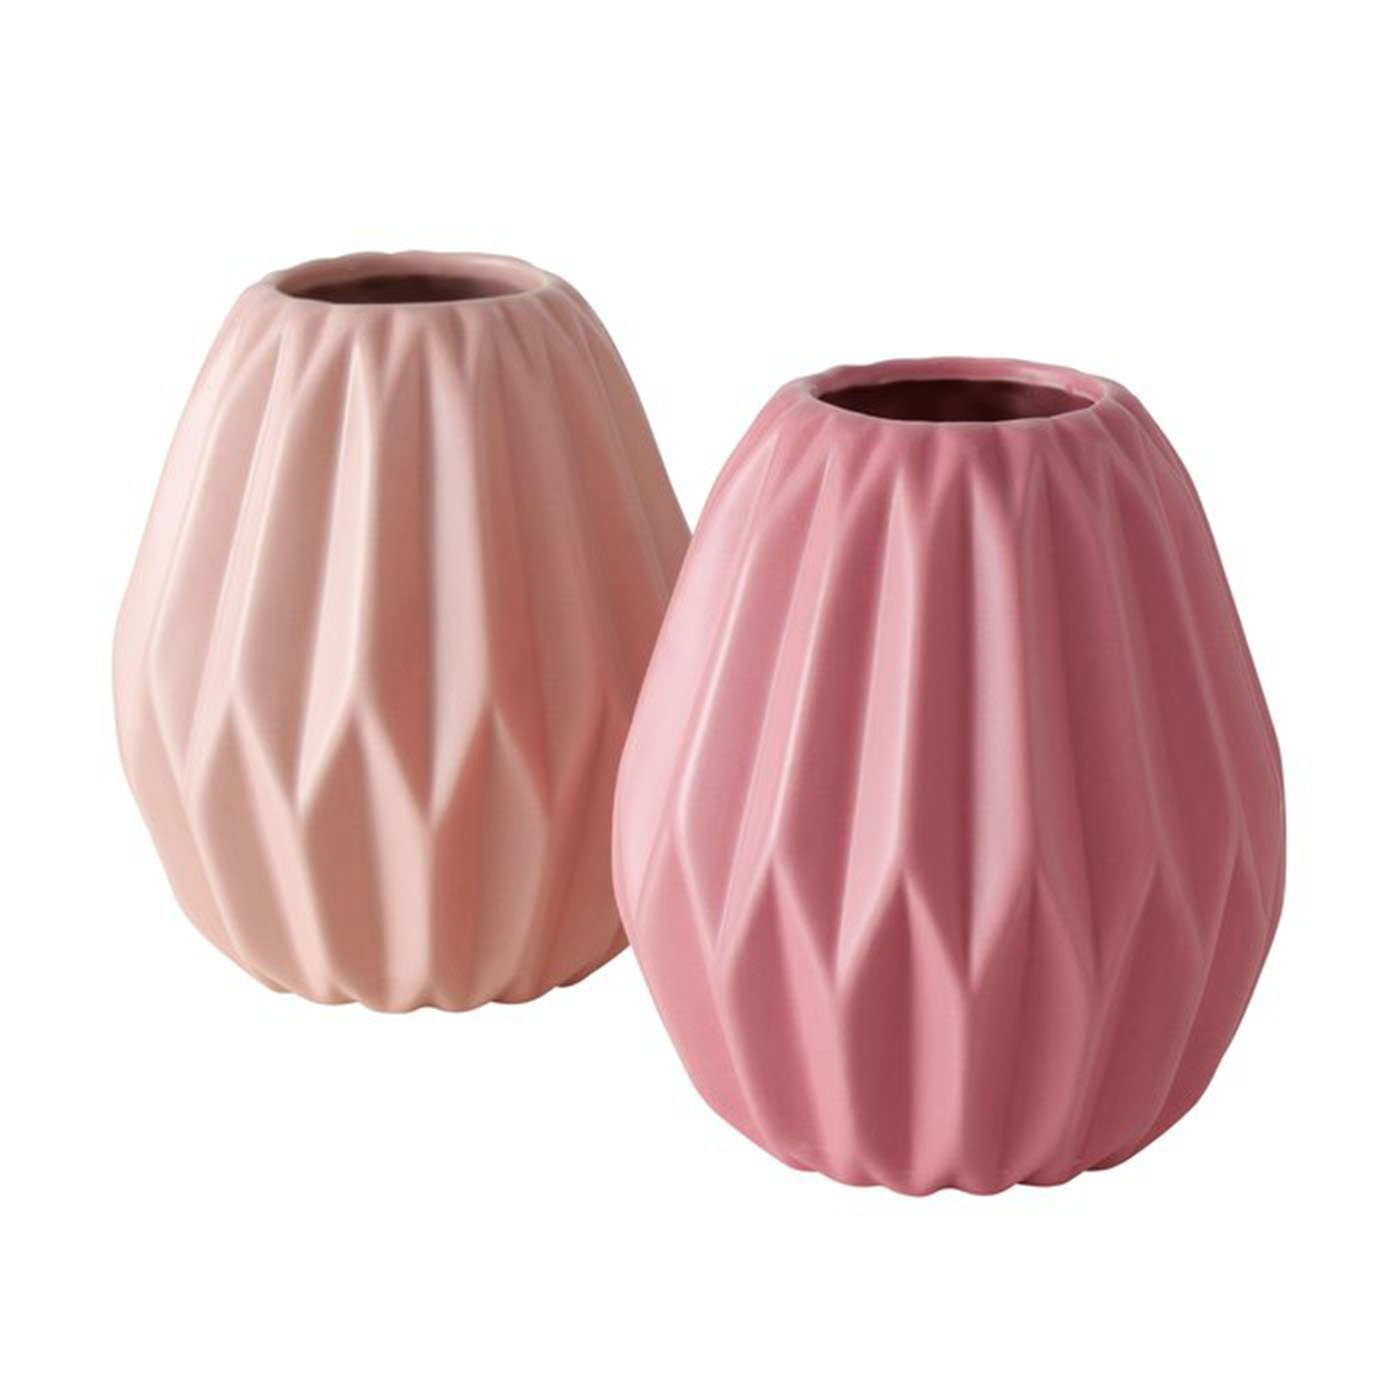 BOLTZE Tischvase Deko Vase 2er Set Gemometrisches Design aus Keramik Matt Rosa